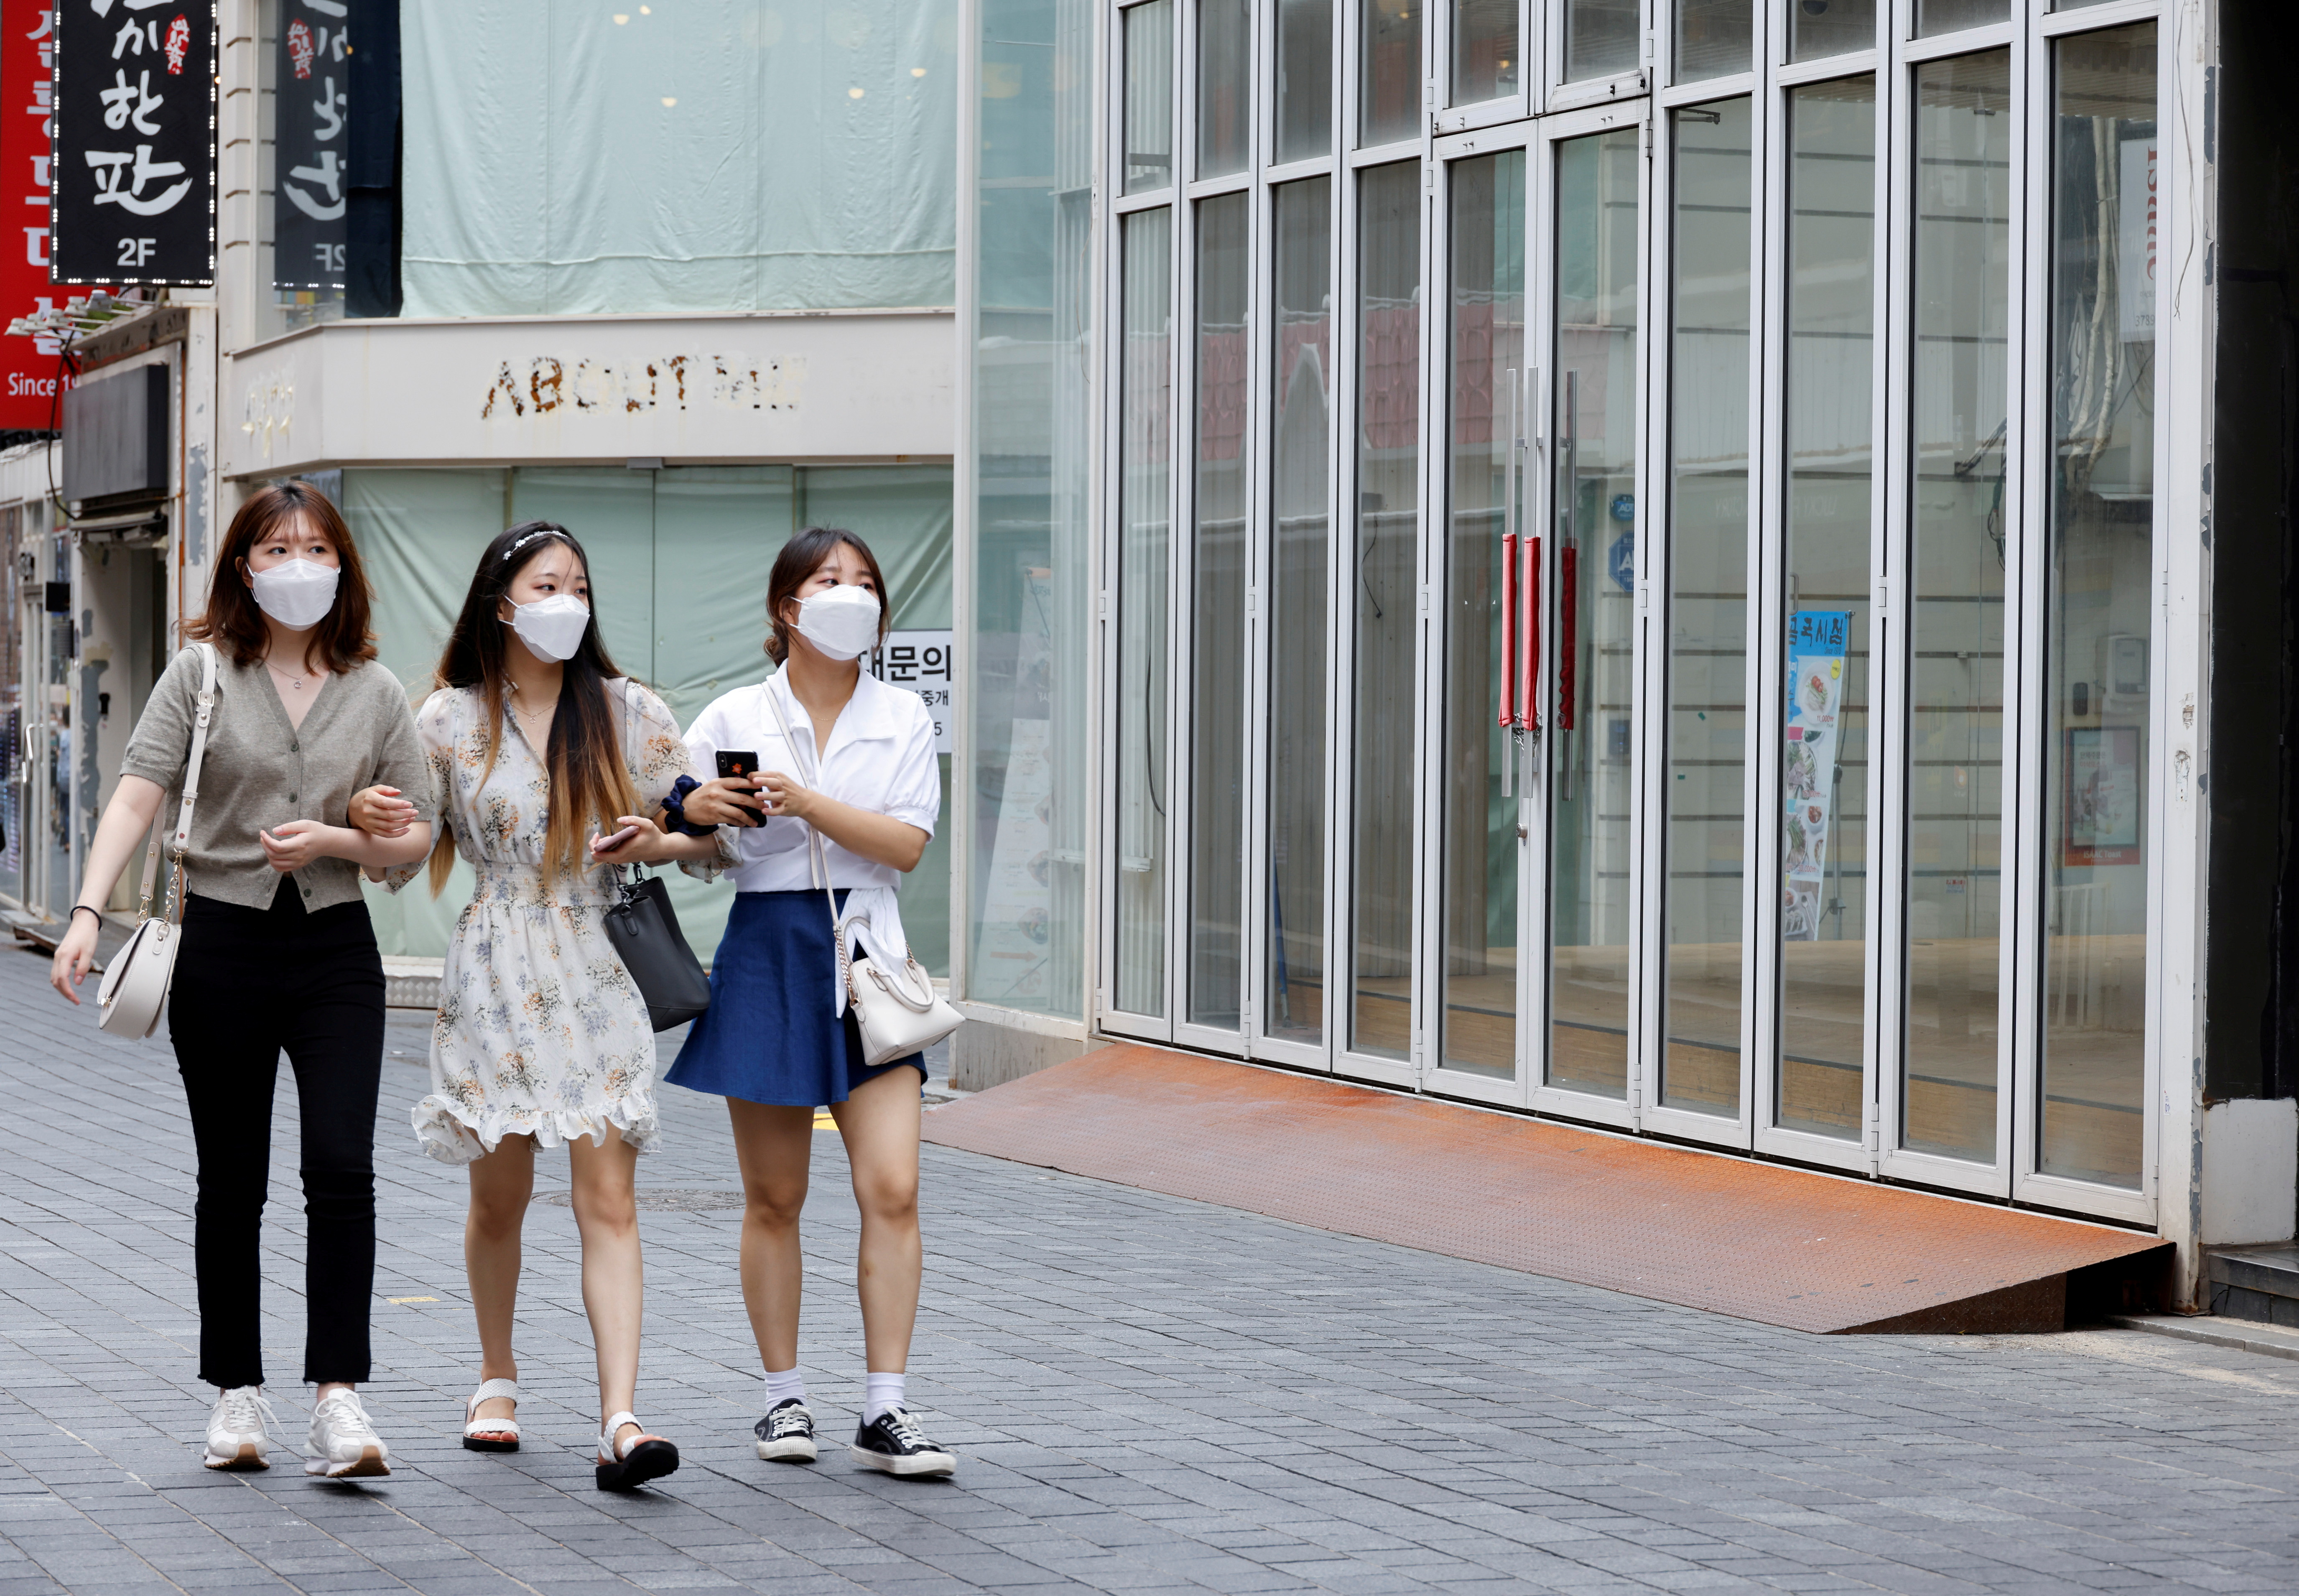 Women wearing masks walk in a shopping district amid the coronavirus disease (COVID-19) pandemic in Seoul